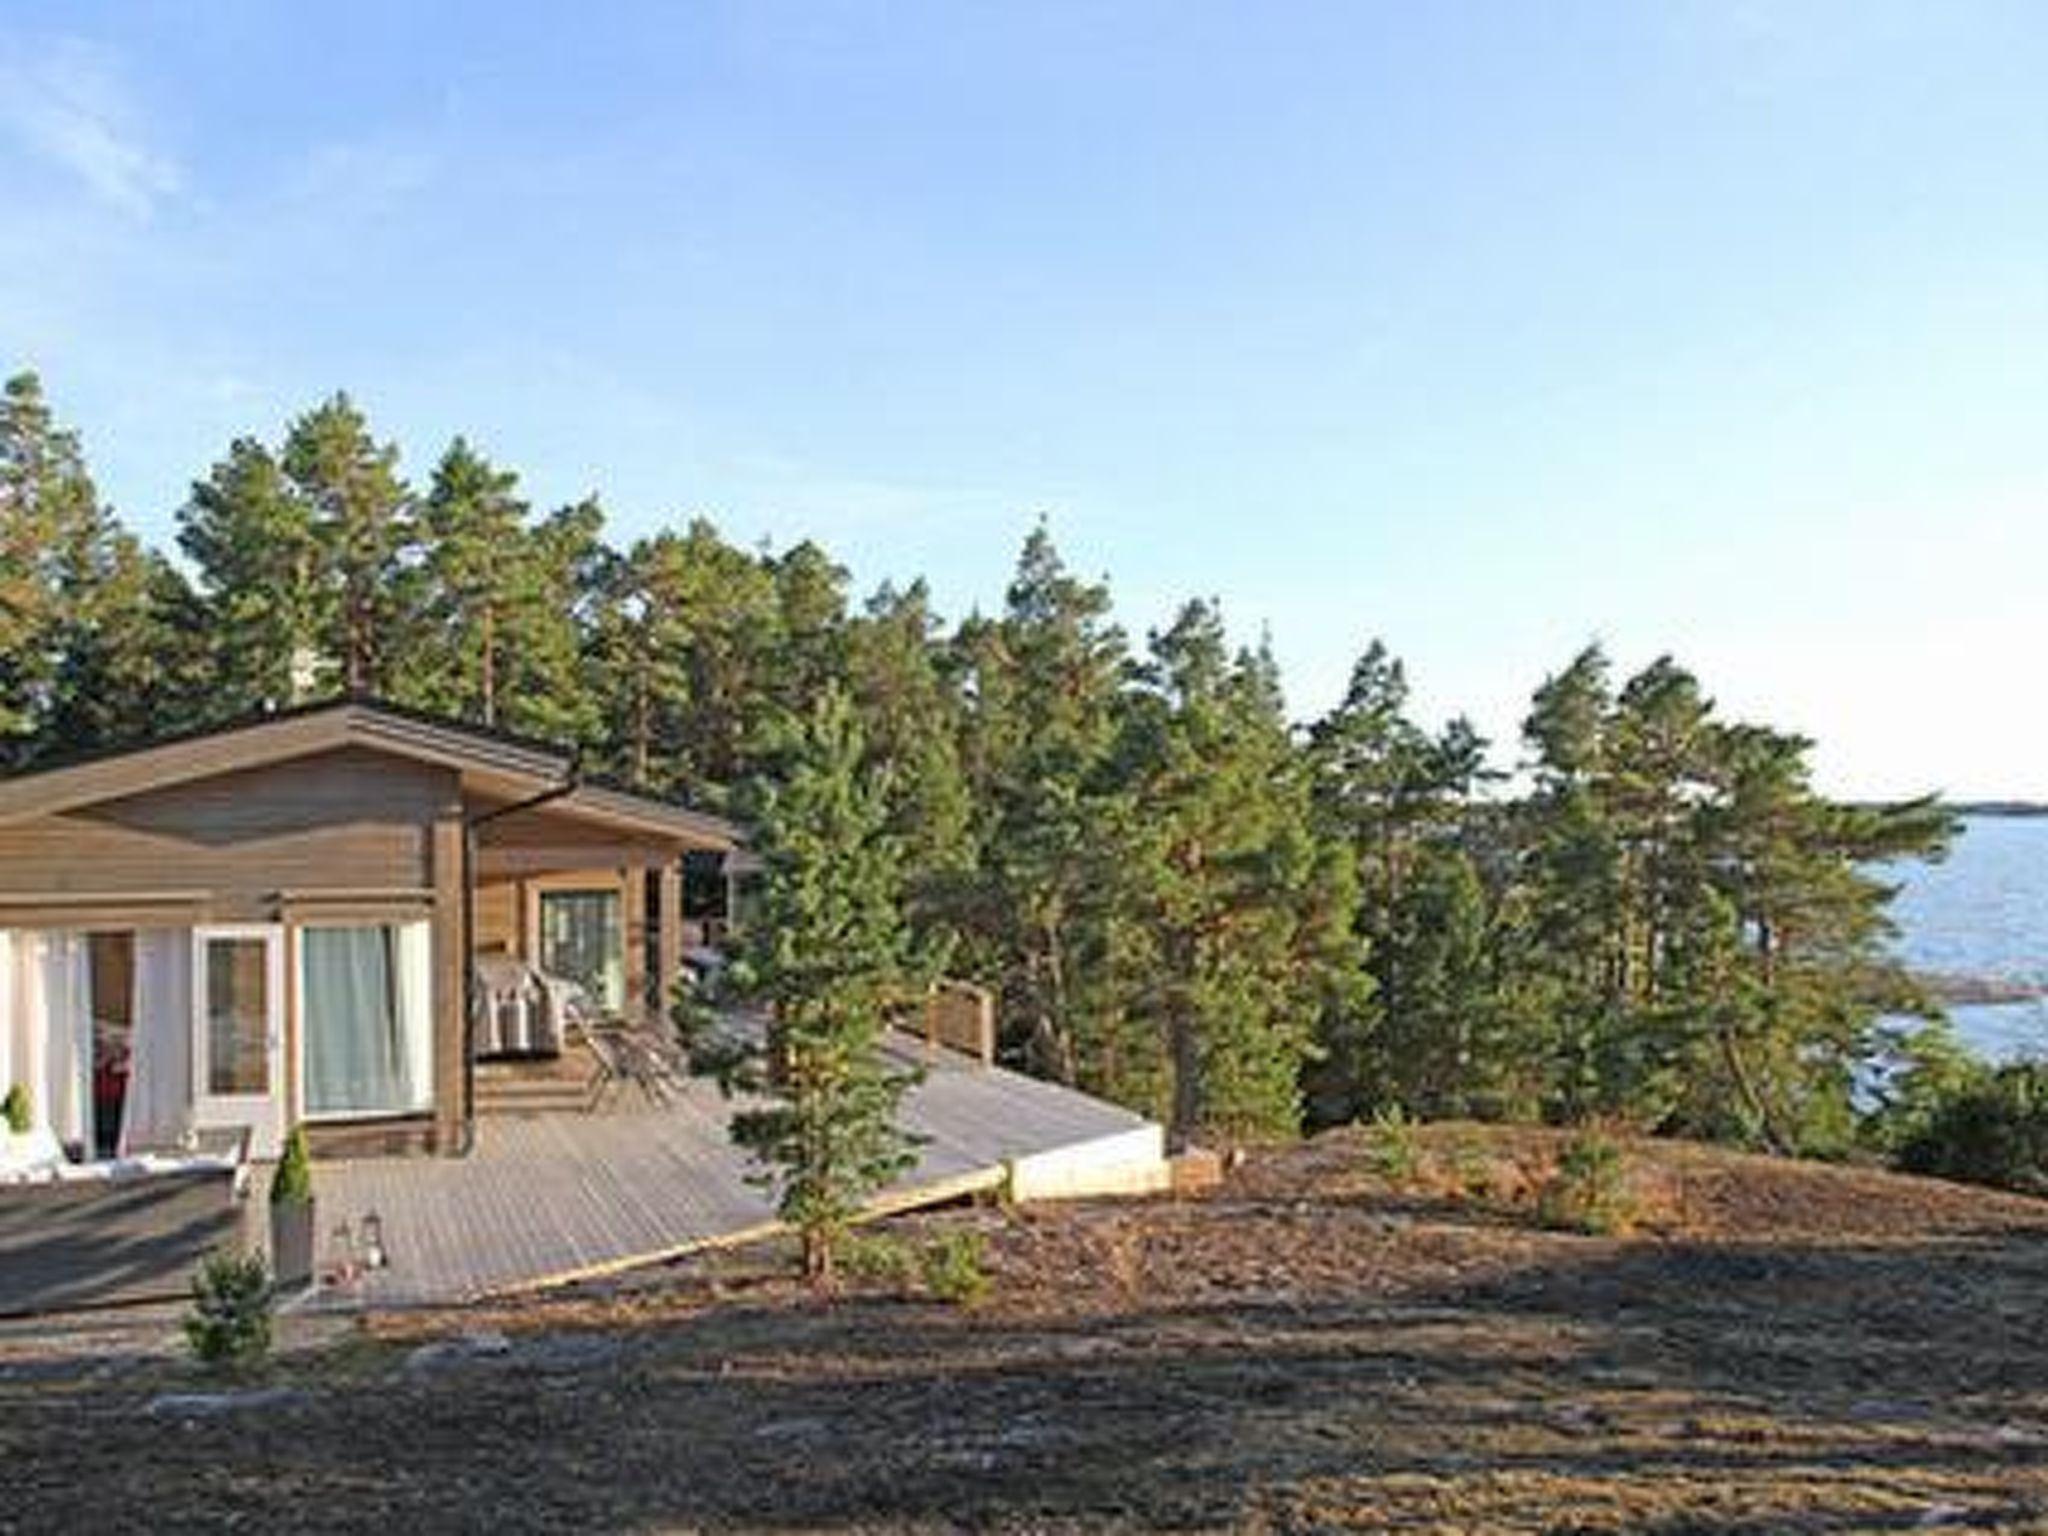 Photo 3 - 4 bedroom House in Kimitoön with sauna